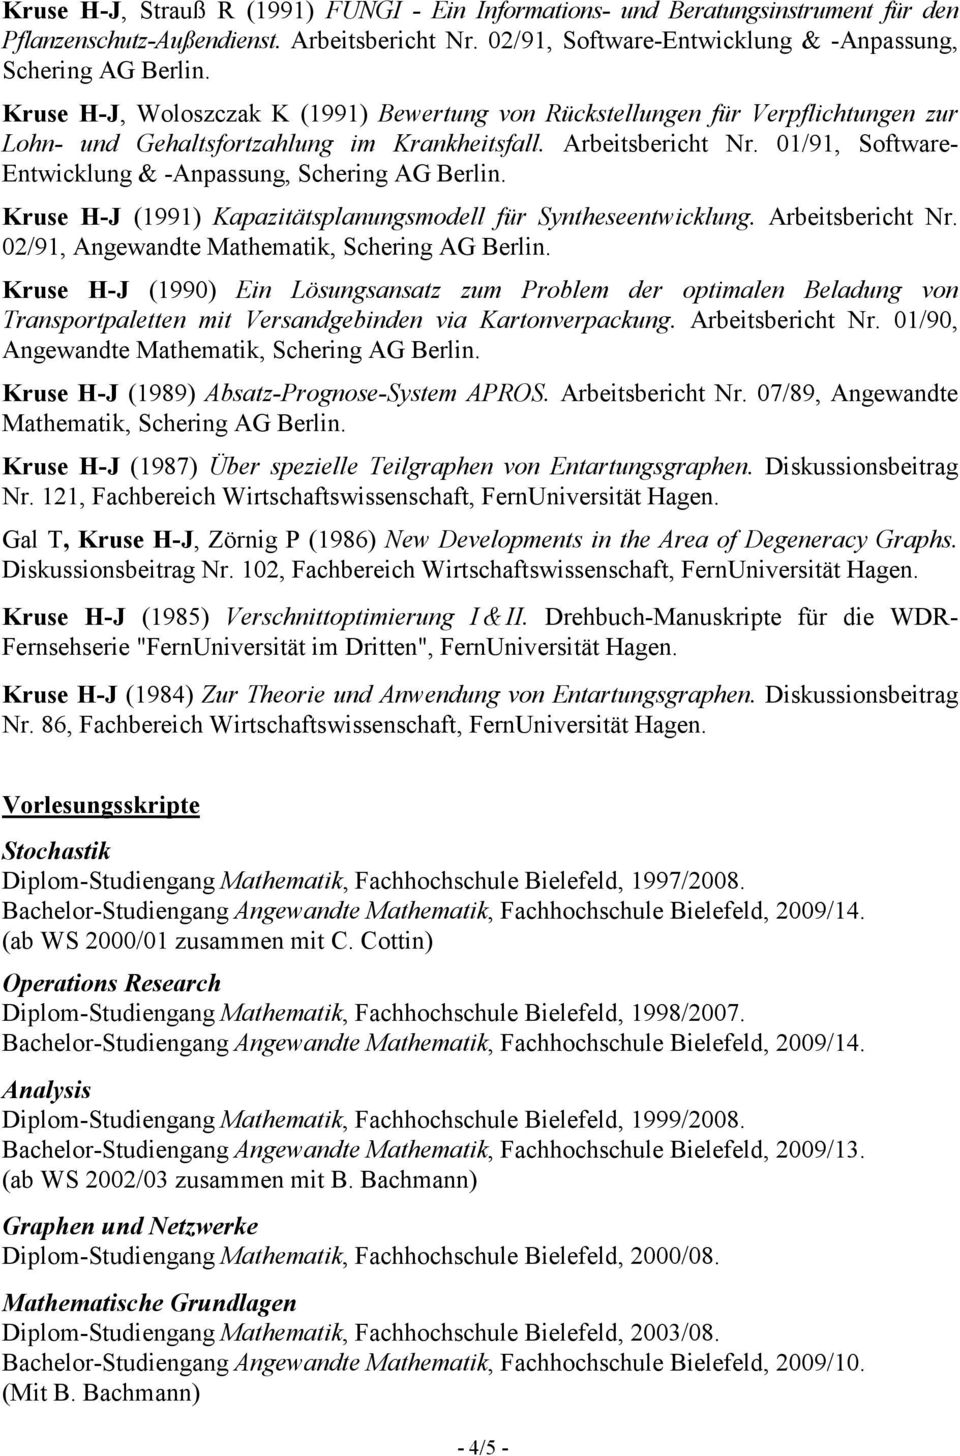 01/91, Software- Entwicklung & -Anpassung, Schering AG Berlin. Kruse H-J (1991) Kapazitätsplanungsmodell für Syntheseentwicklung. Arbeitsbericht Nr. 02/91, Angewandte Mathematik, Schering AG Berlin.